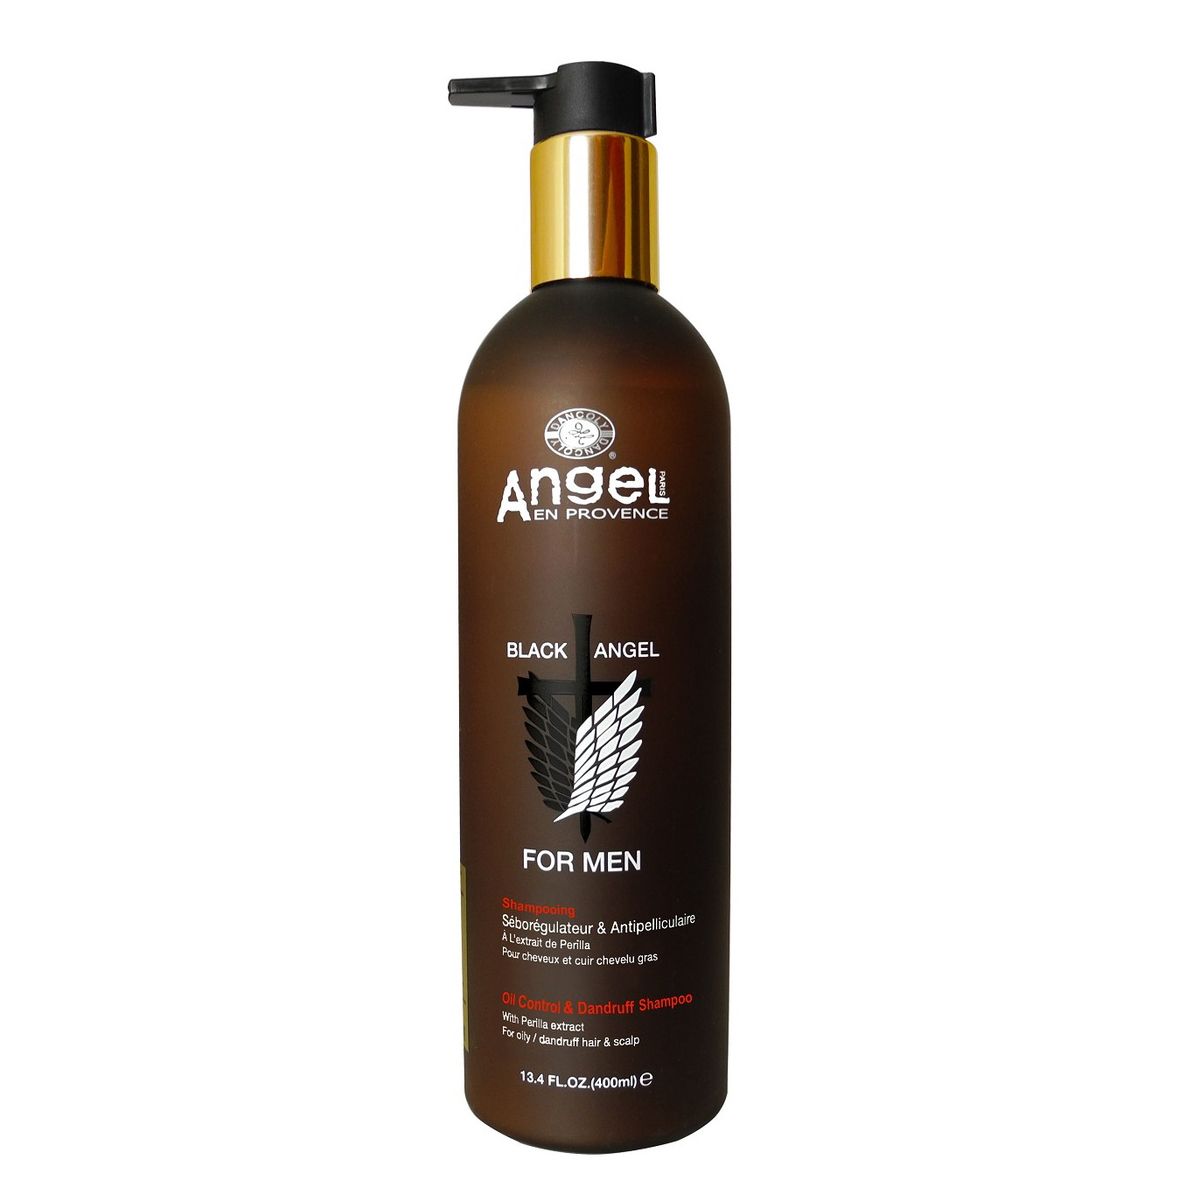 Black Angel for Men Oil Control and Dandruff Shampoo 77100